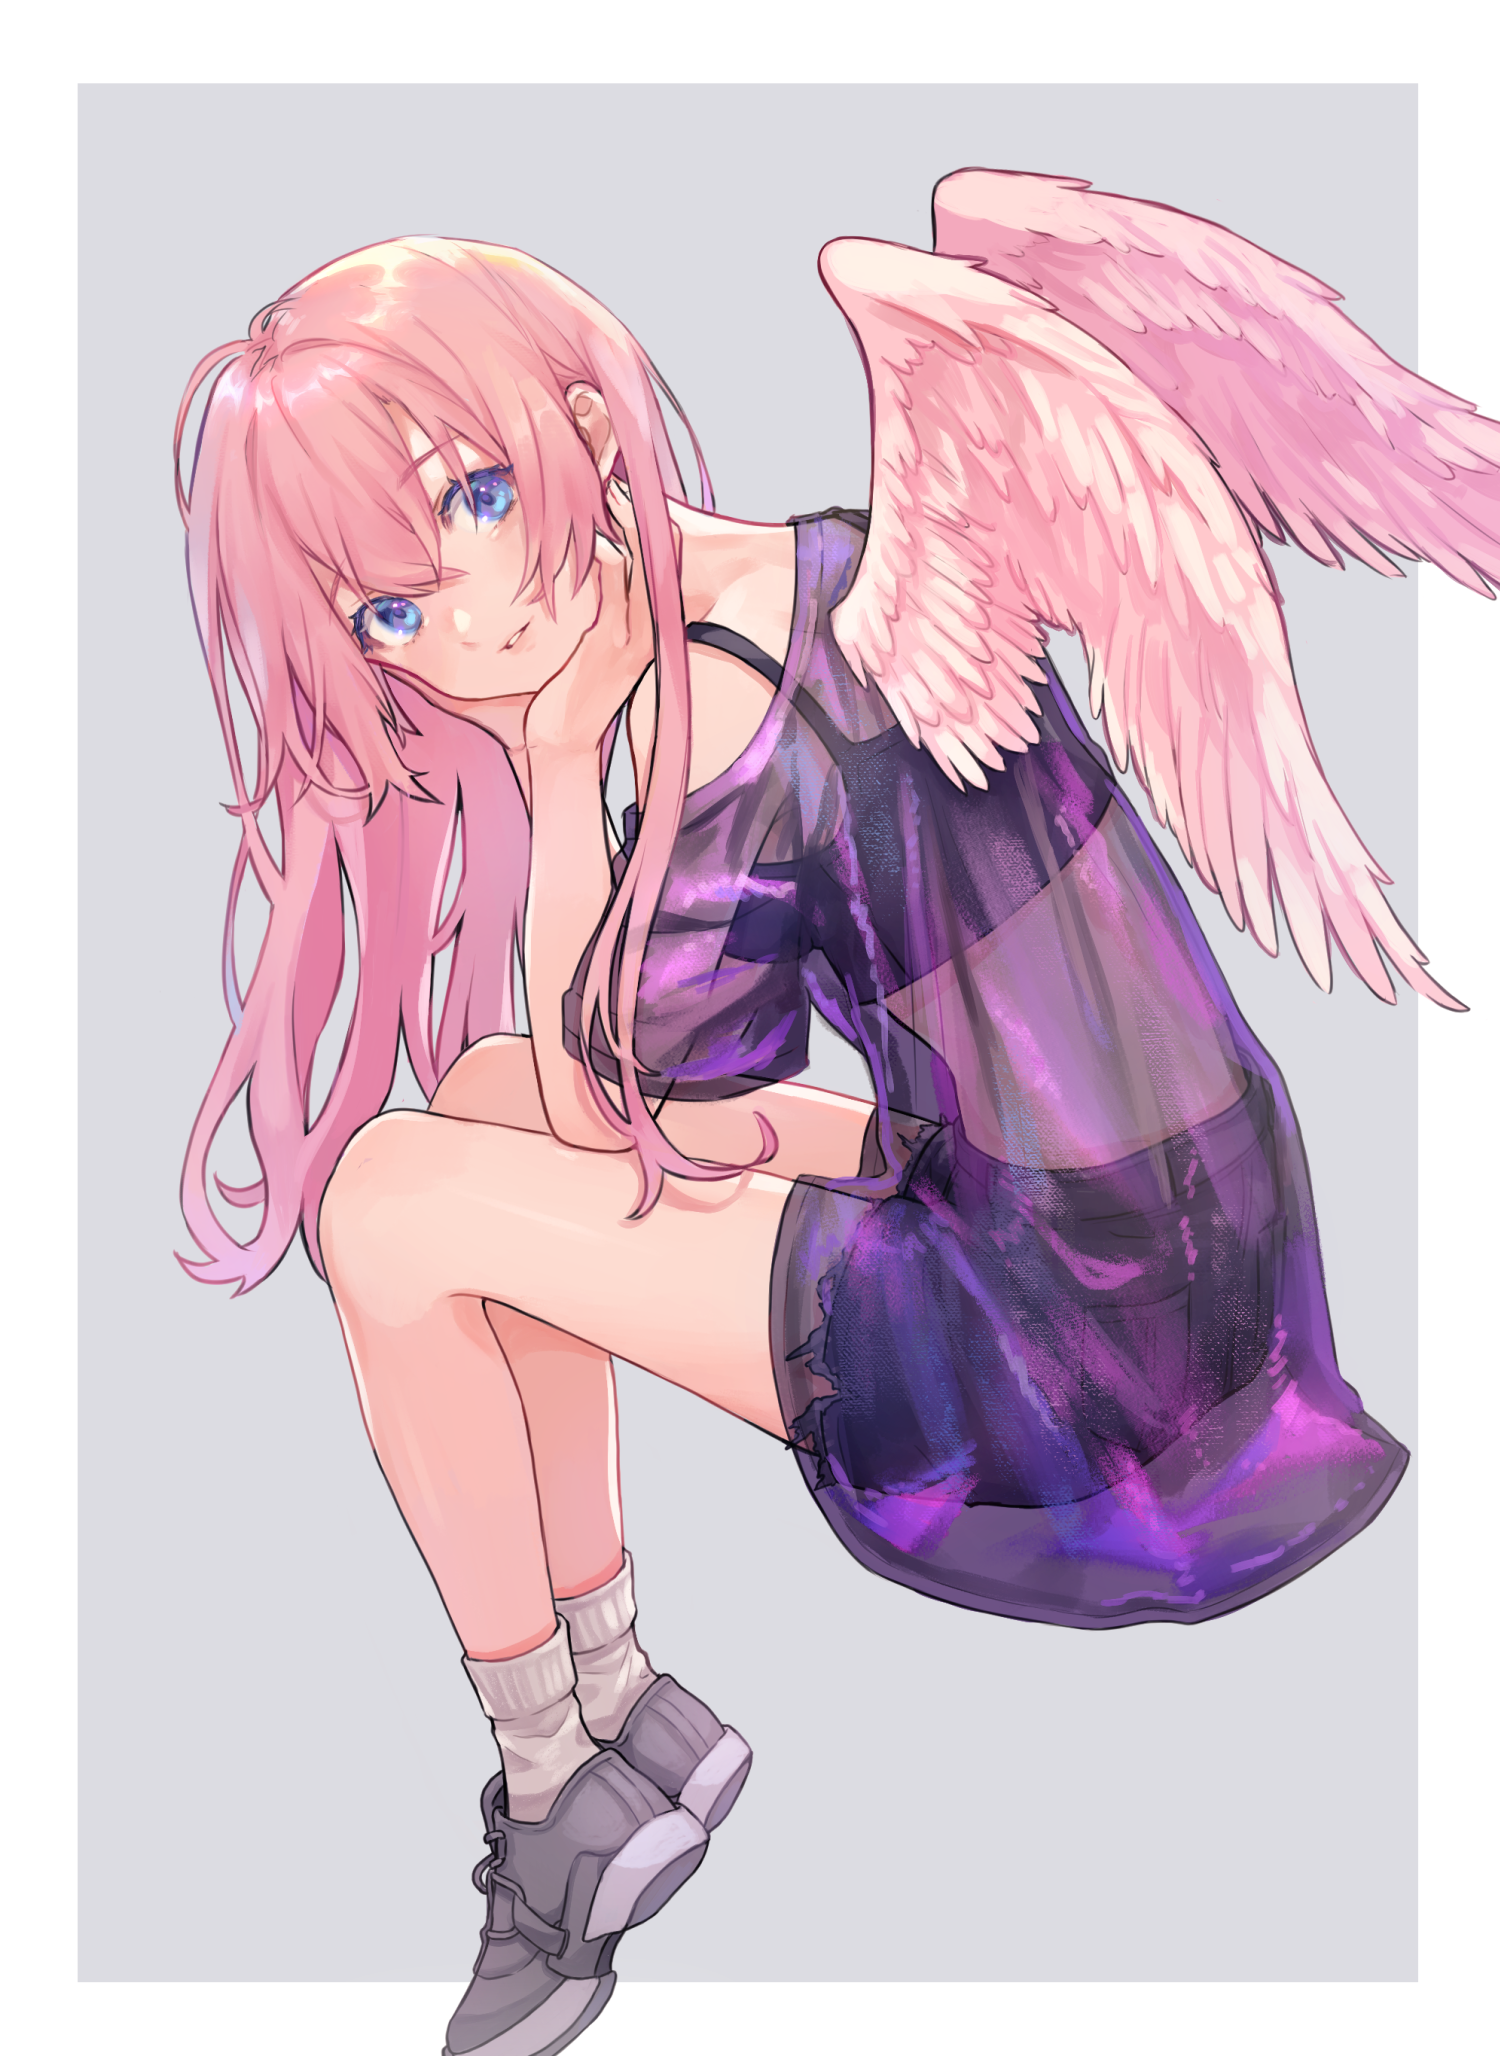 Anime 1500x2056 anime anime girls digital art artwork 2D portrait display pink hair blue eyes wings see-through clothing Saino short shorts crop top